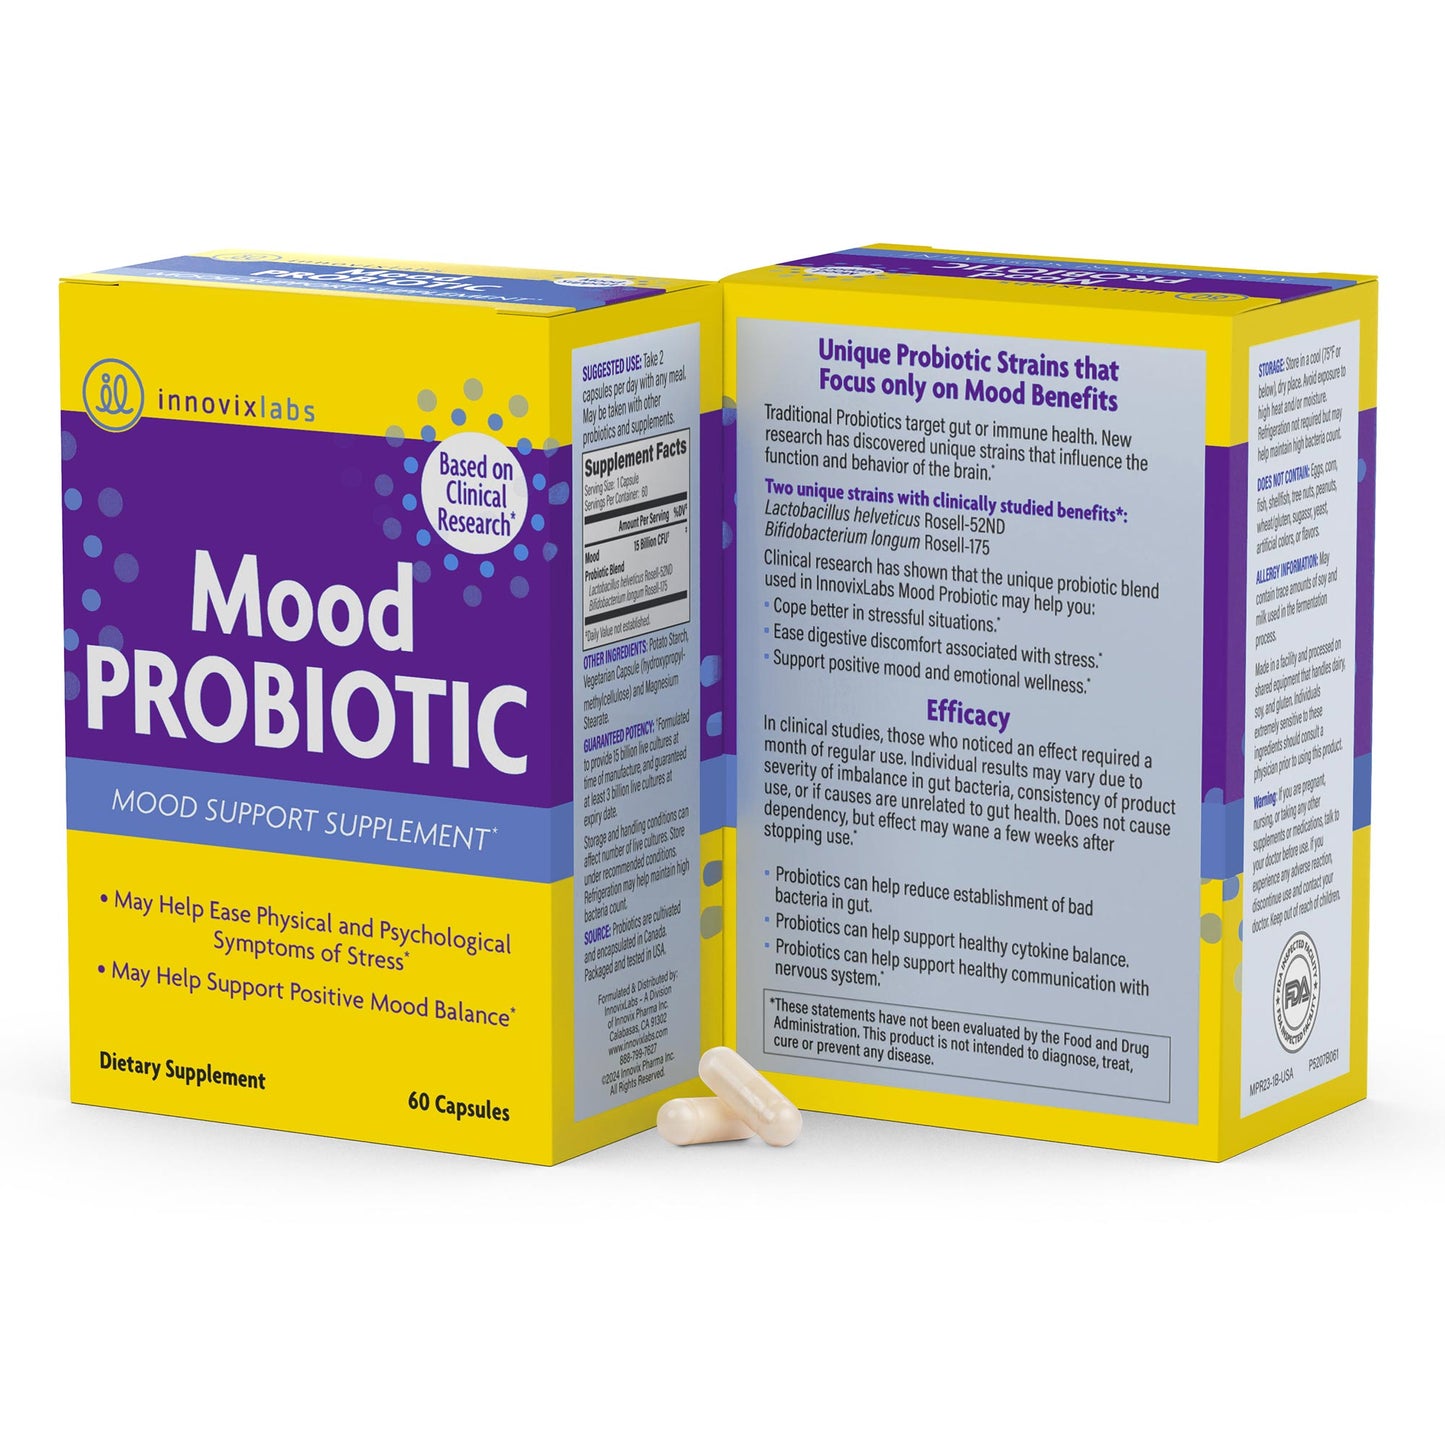 Mood Probiotic